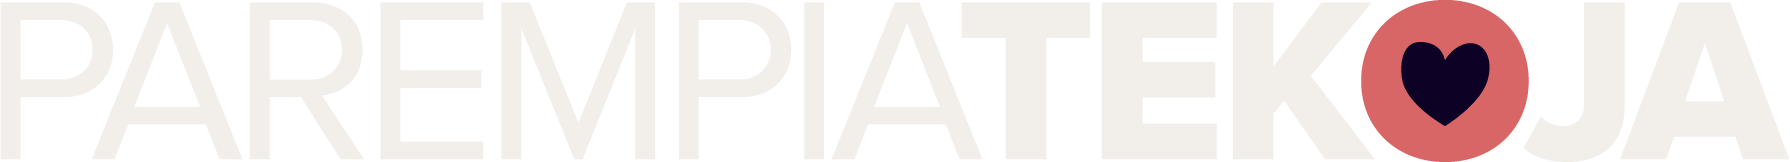 Parempia Tekoja logo